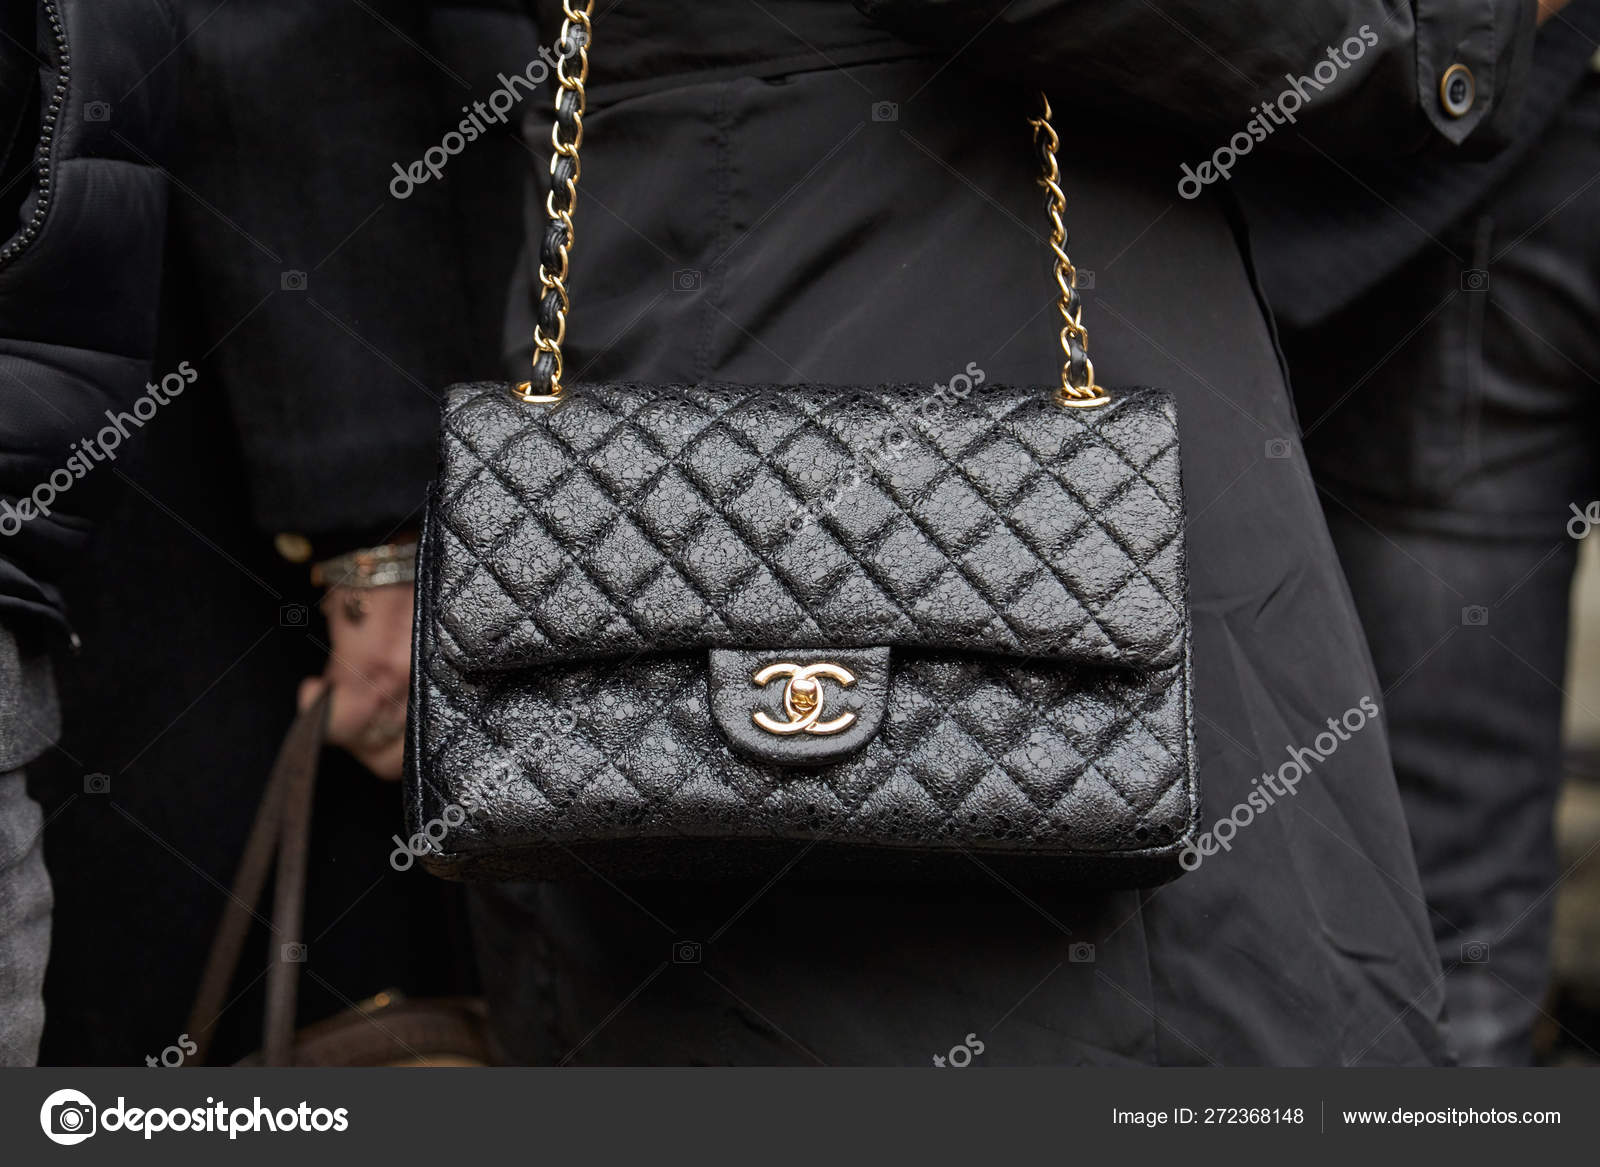 41 Chanel Handbags Sale Images, Stock Photos, 3D objects, & Vectors